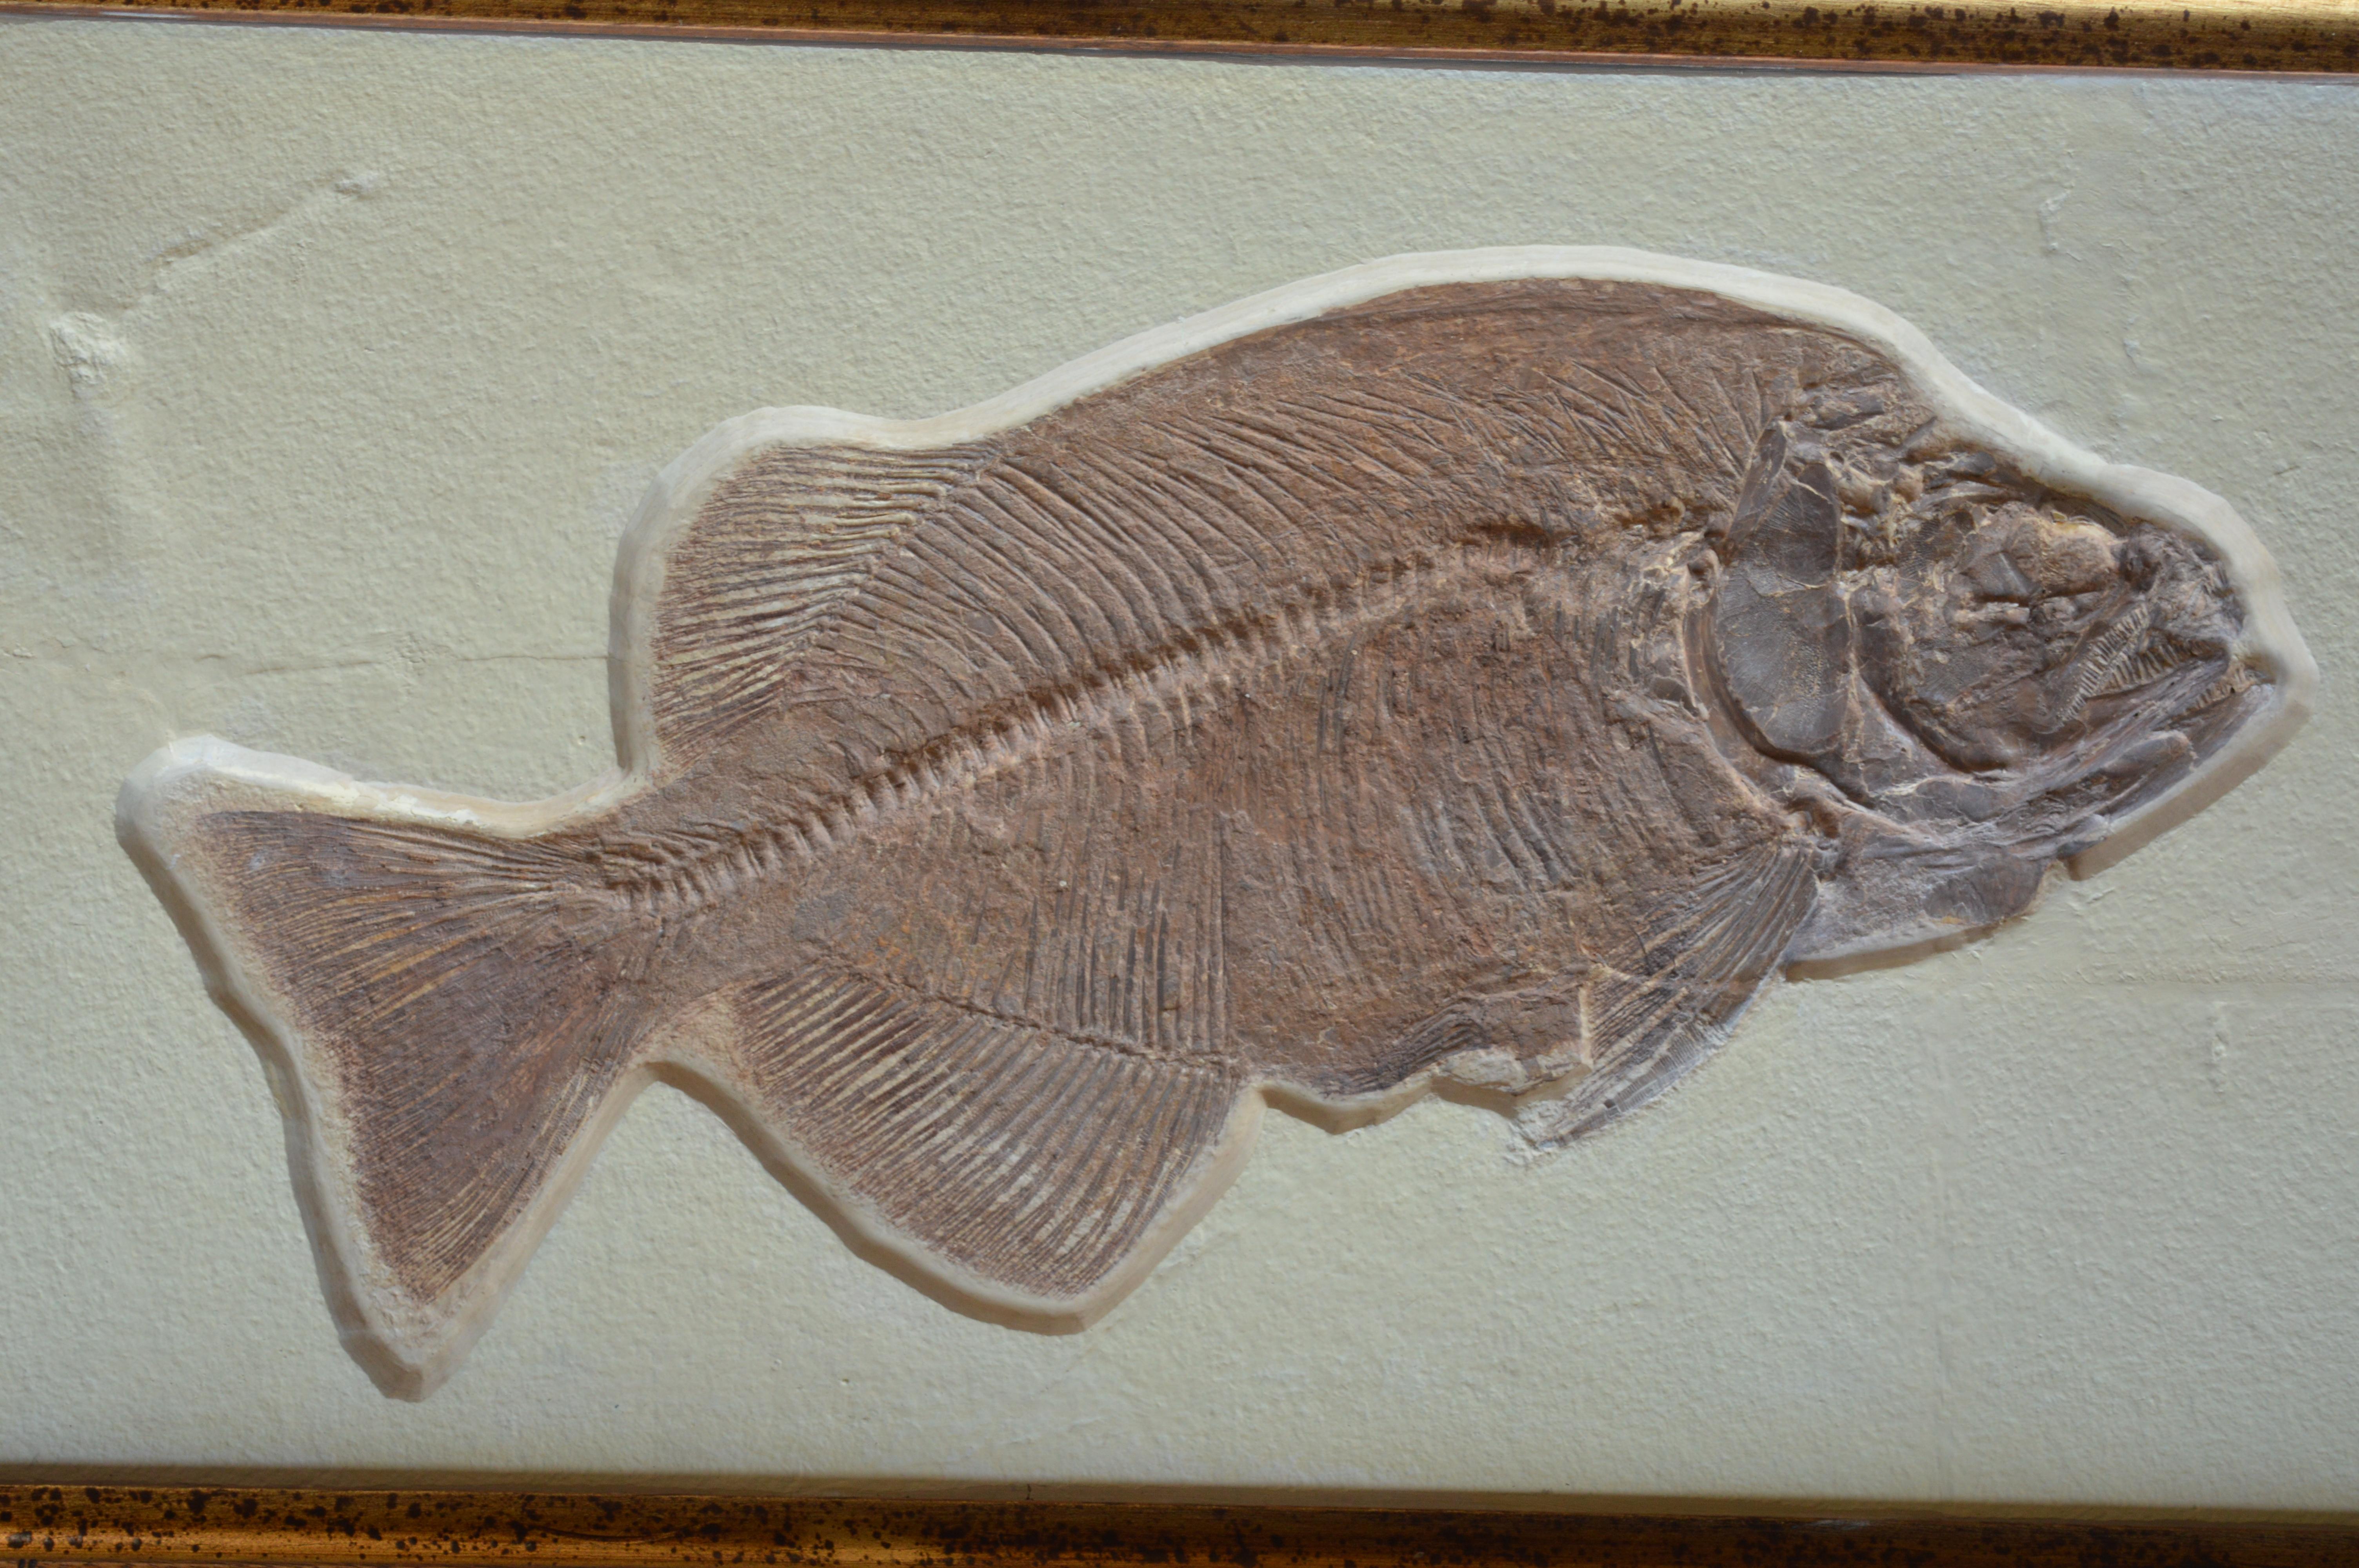 Other Phareodus Fish Fossil from Eocene Era on Limestone